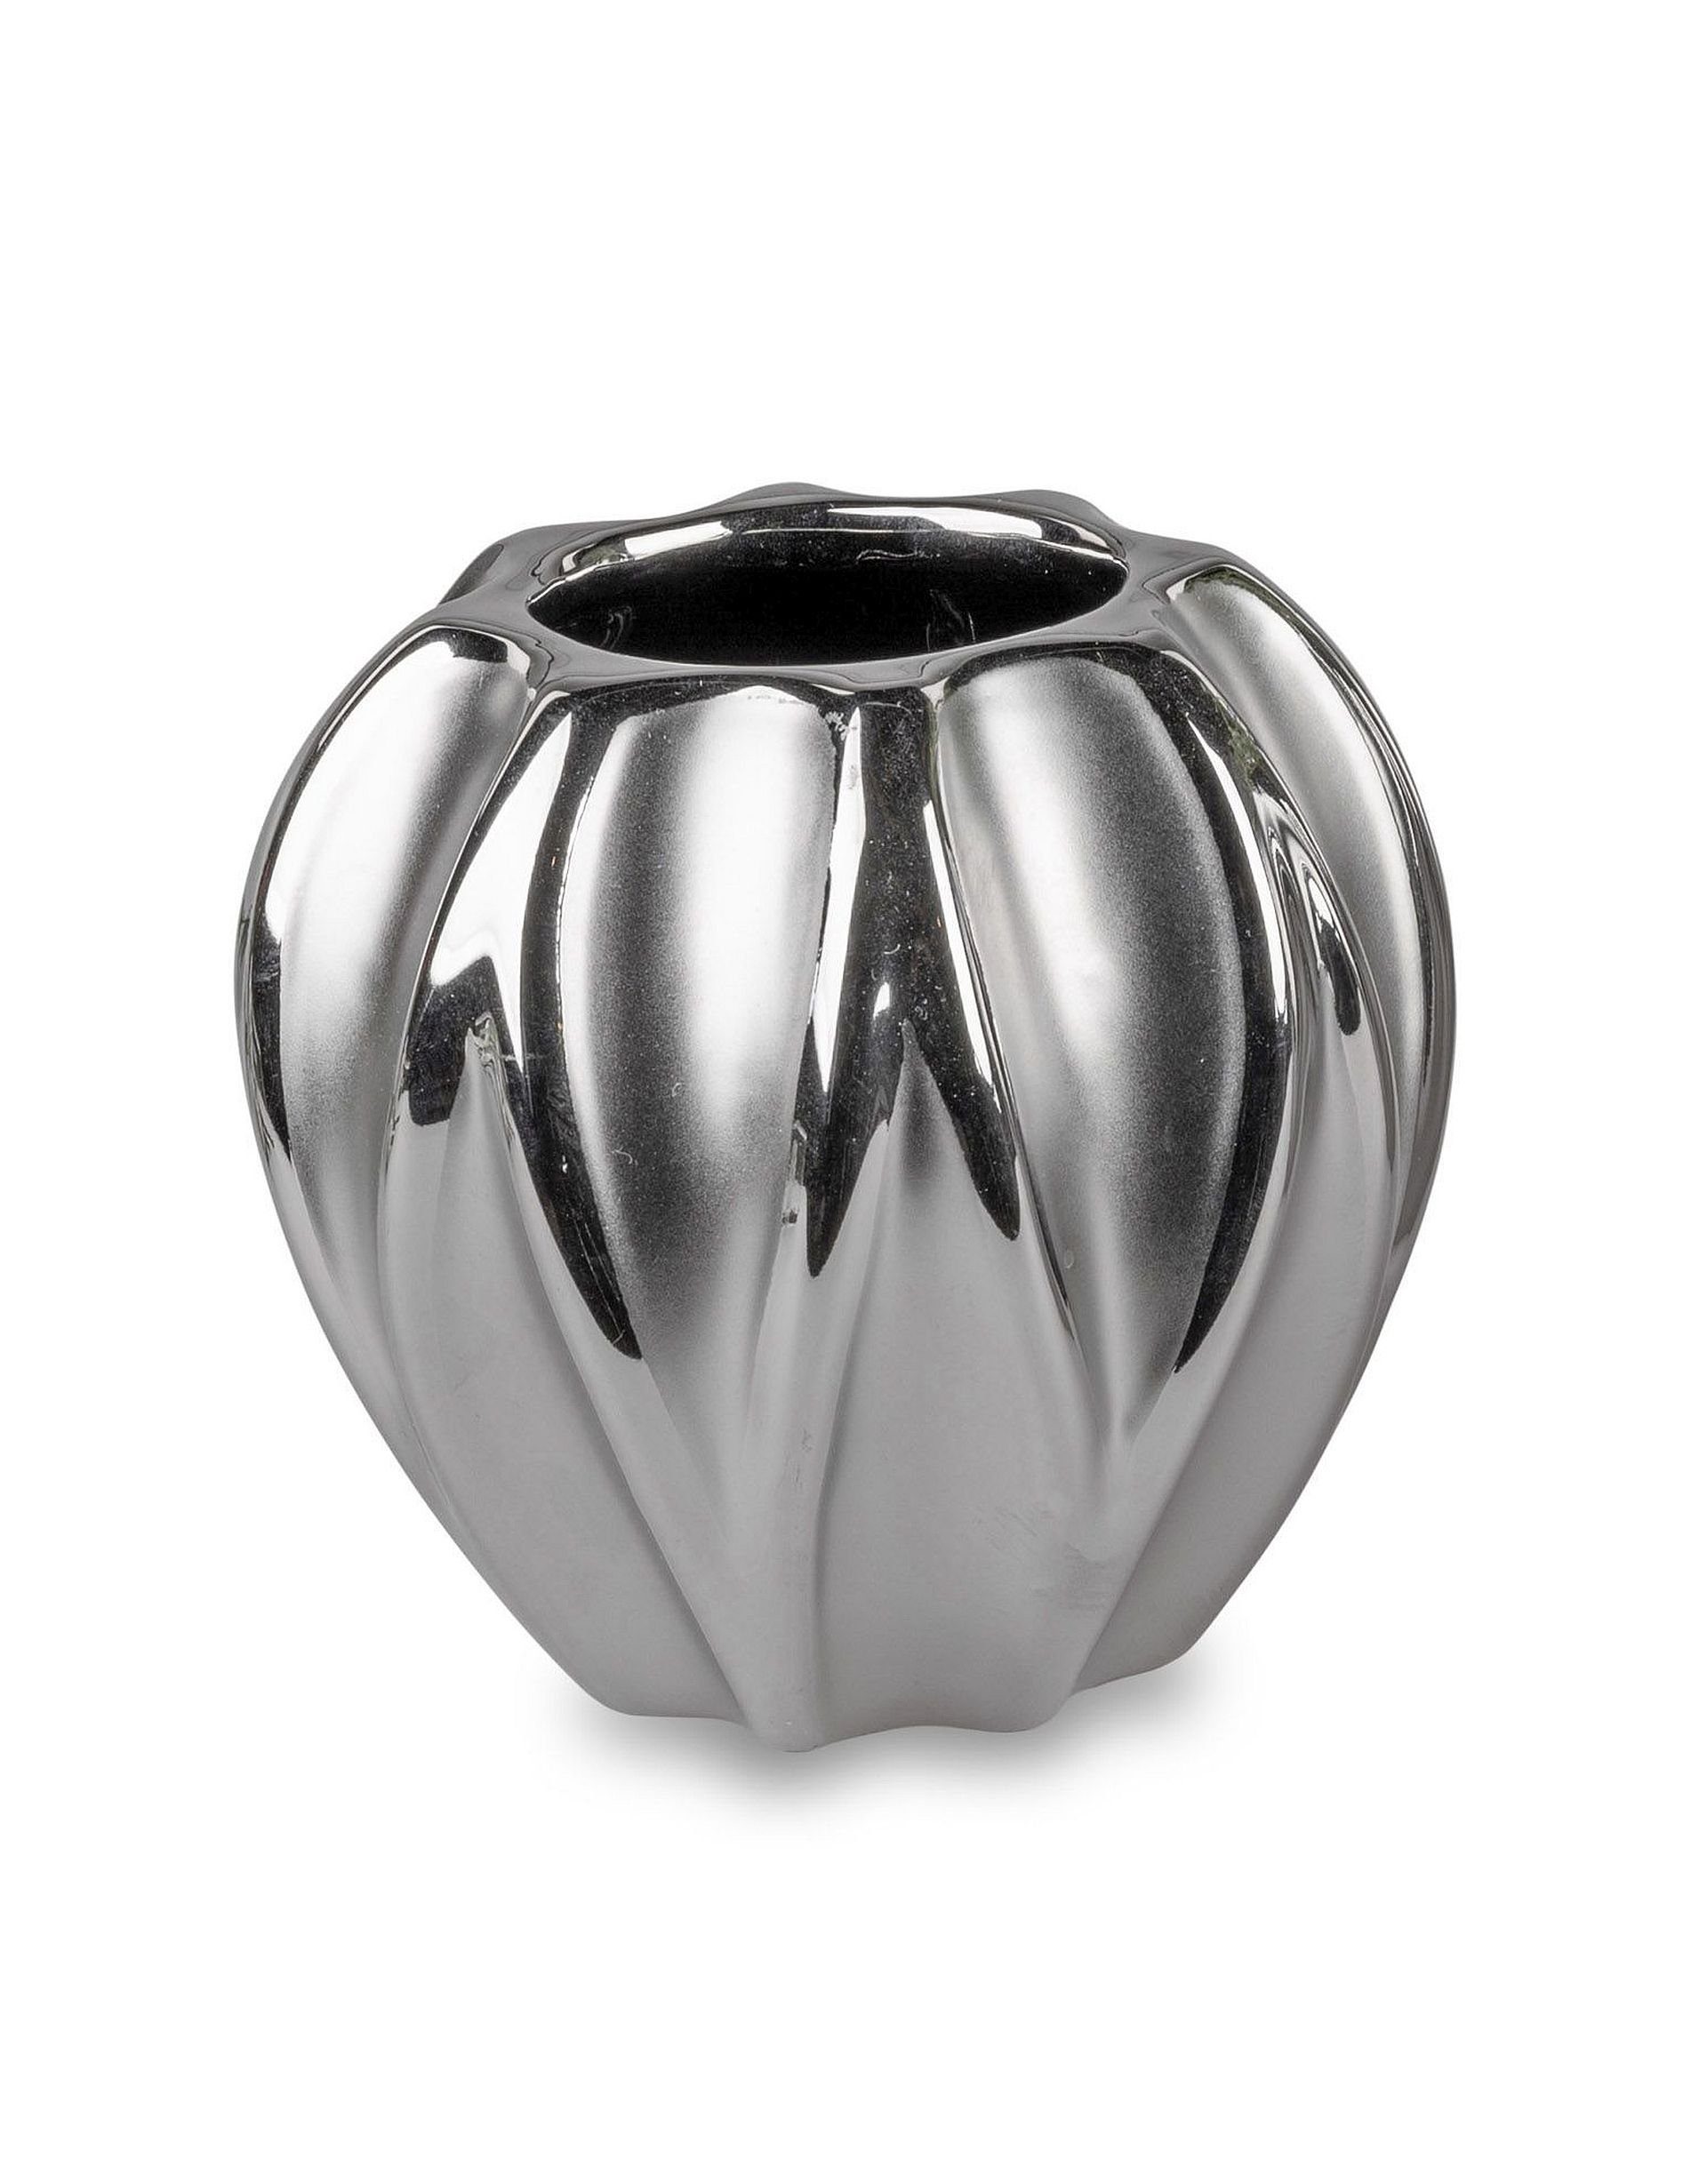 Small-Preis Dekovase Formano Vase matt Silber in 4 Größen wählbar | Dekovasen